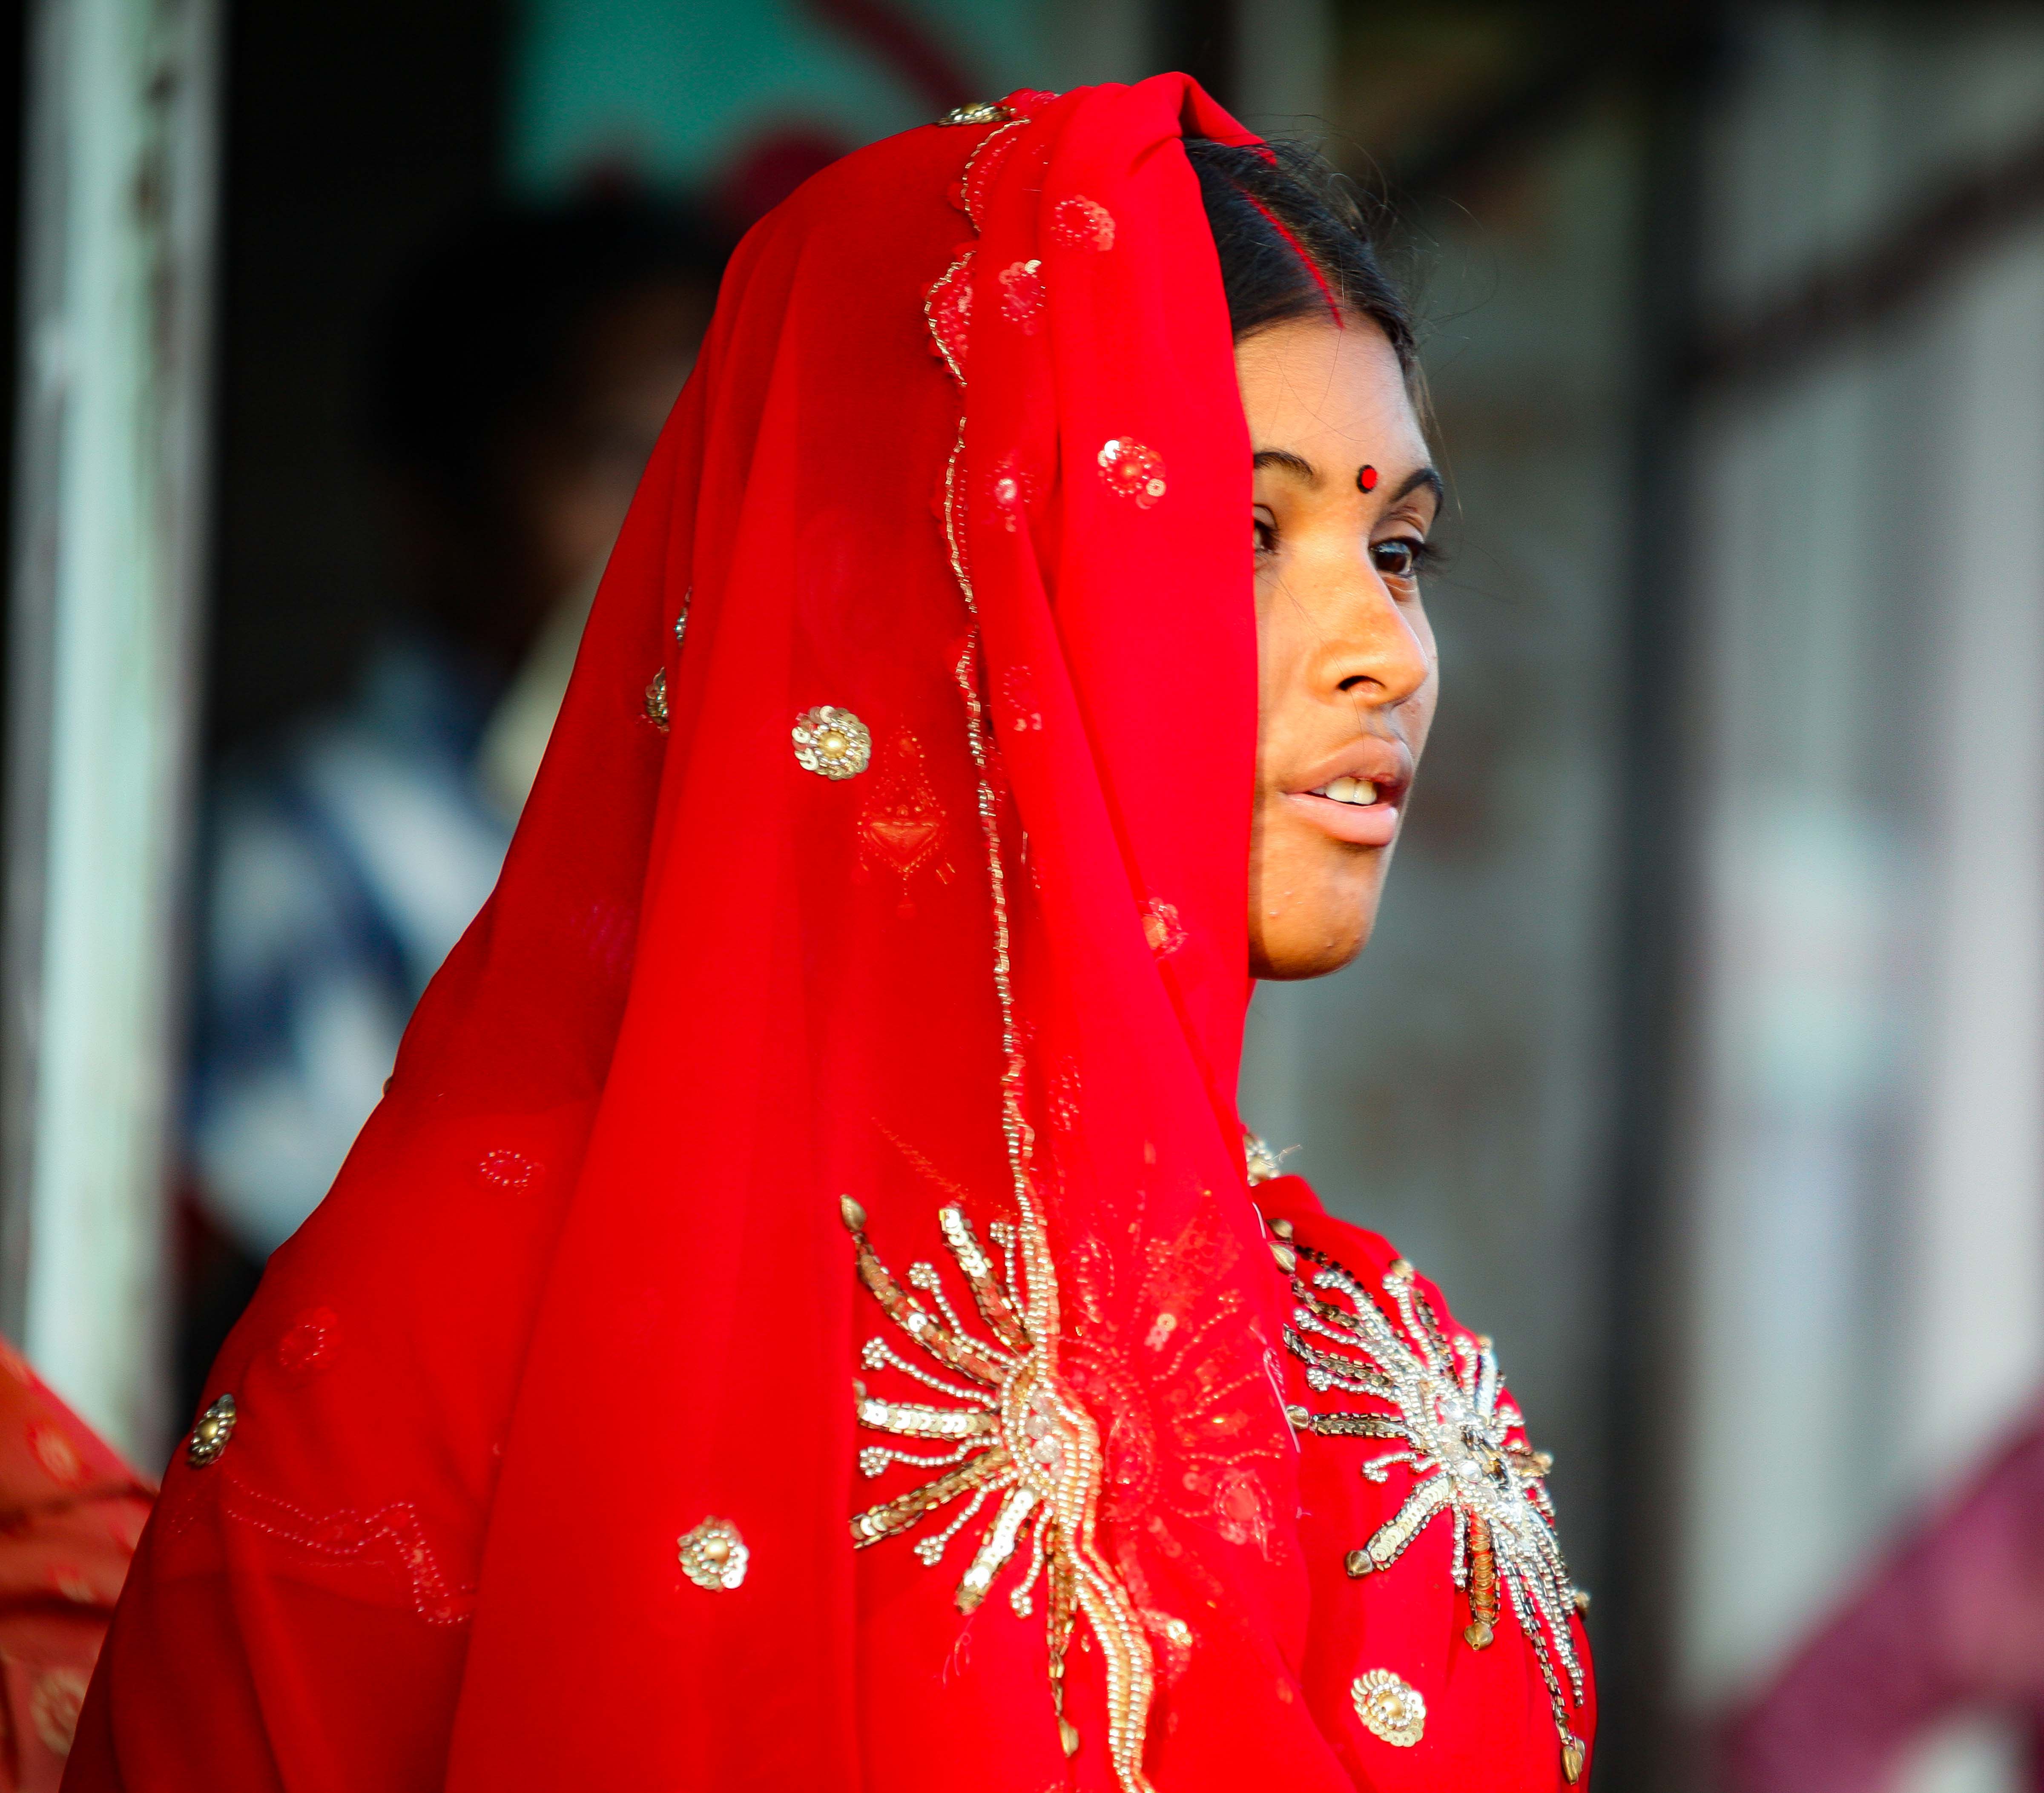 Red Shawl Woman